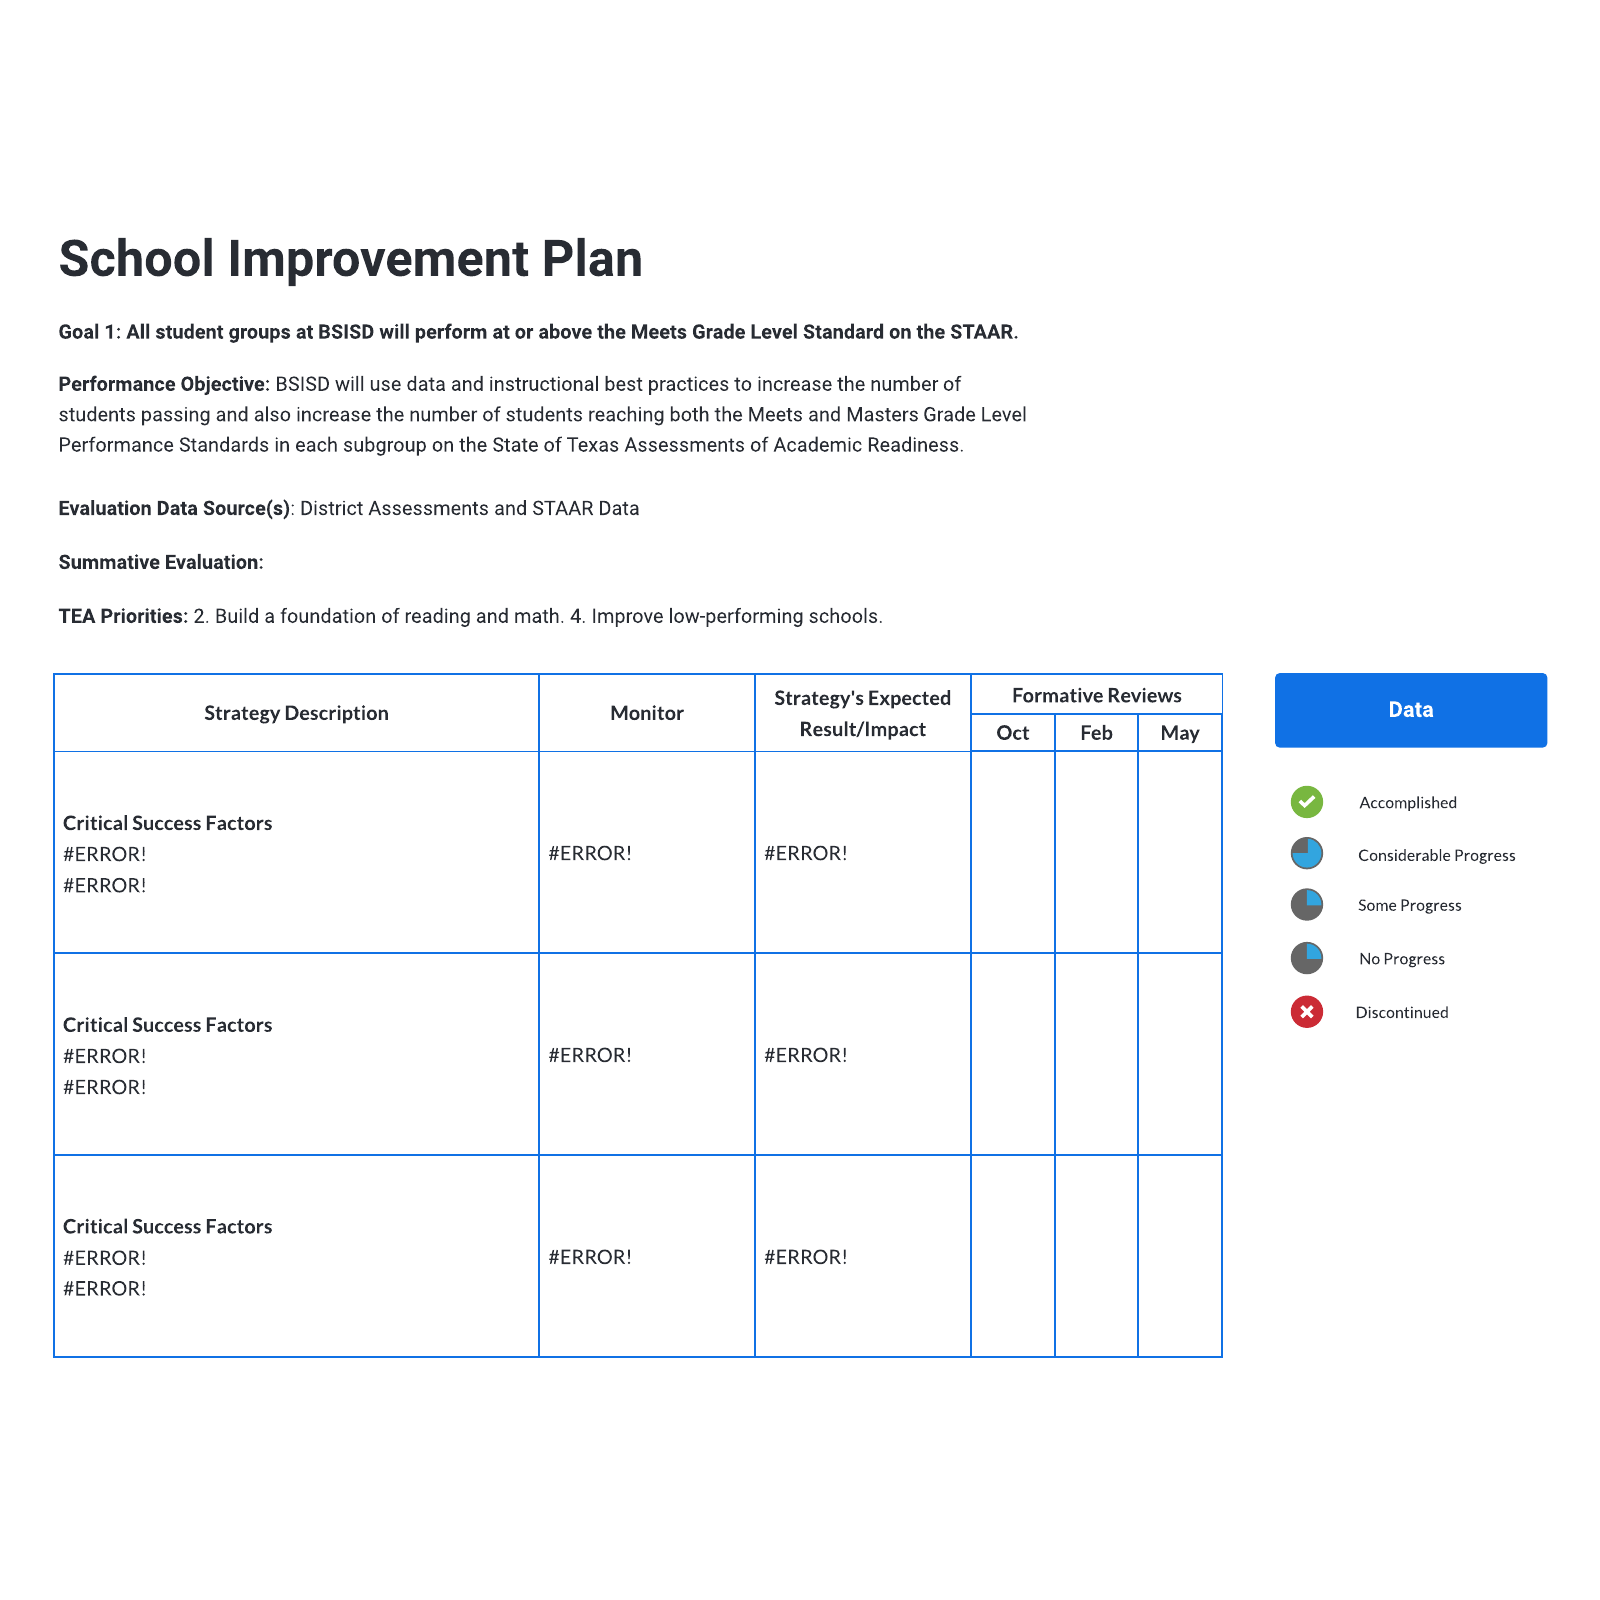 School Improvement Plan example